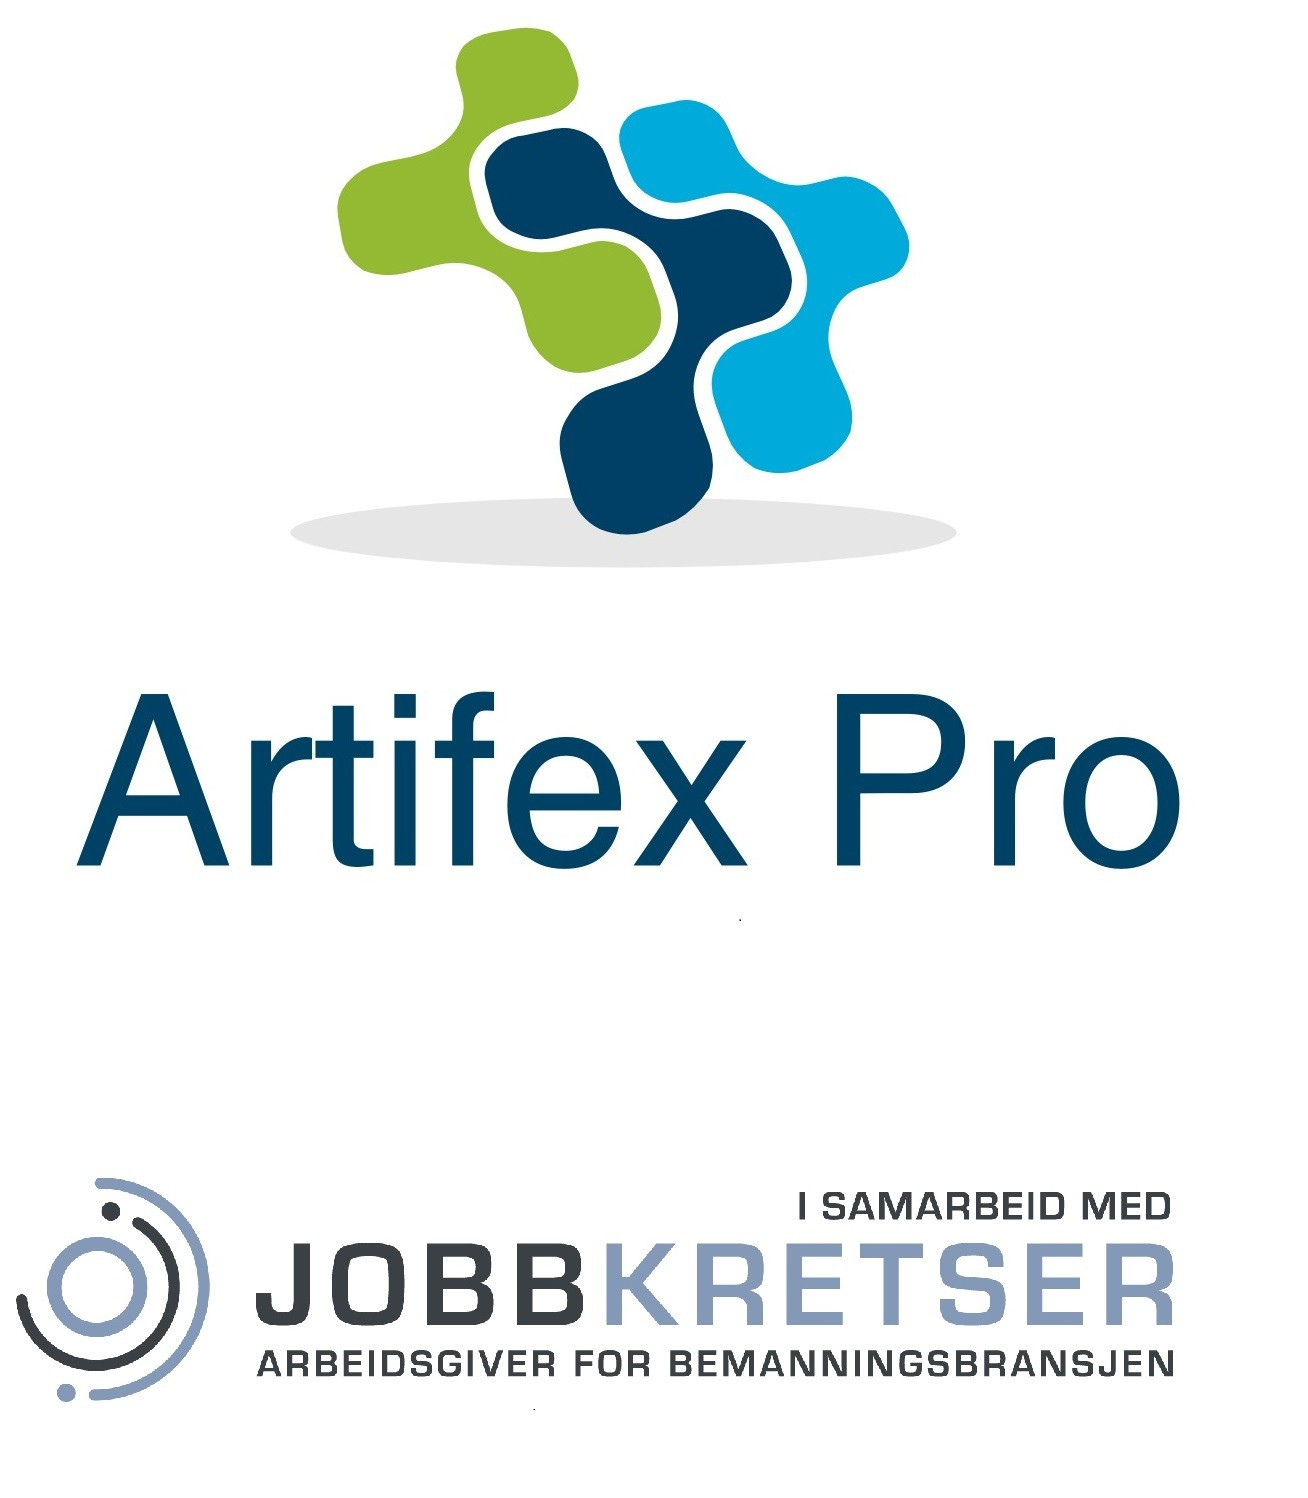 Artifex Pro As